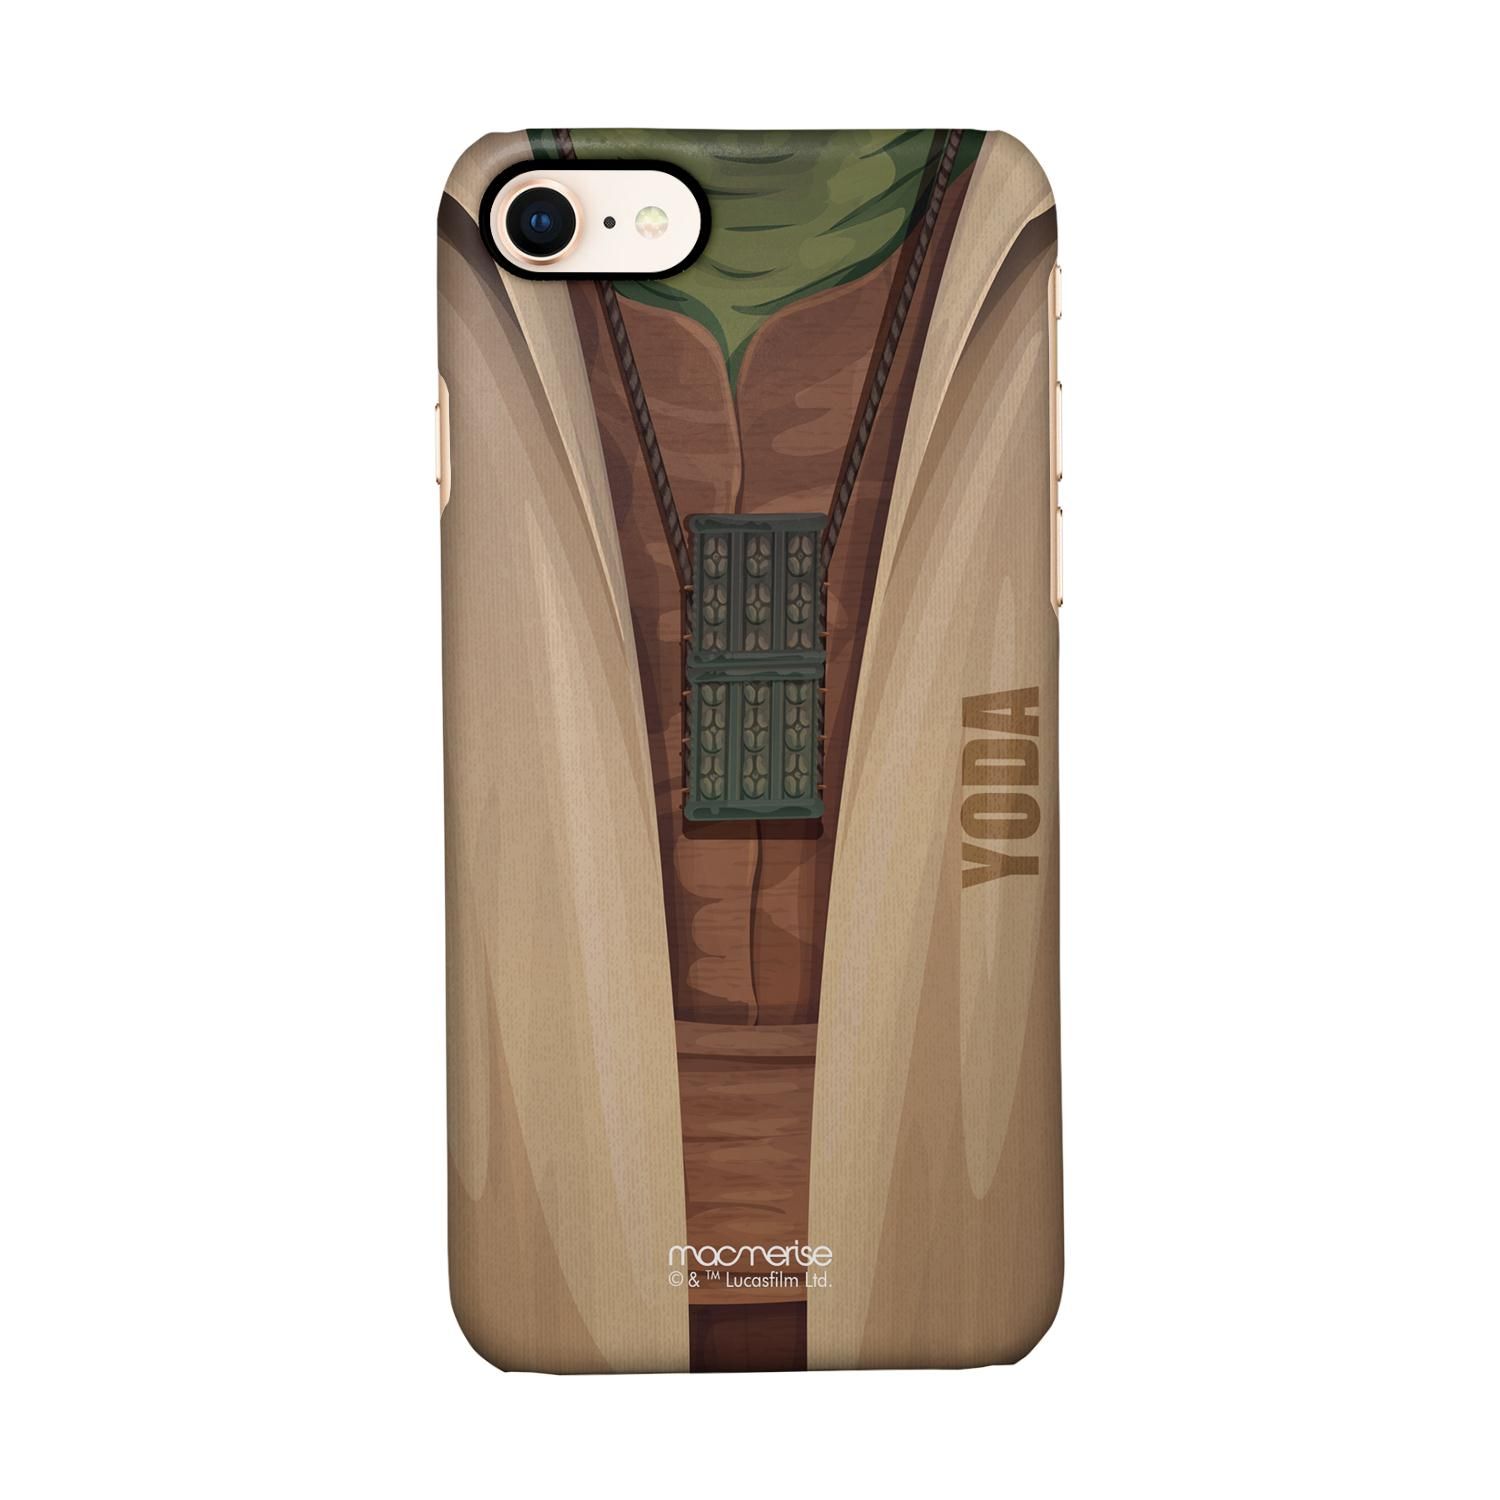 Buy Attire Yoda - Sleek Phone Case for iPhone 7 Online